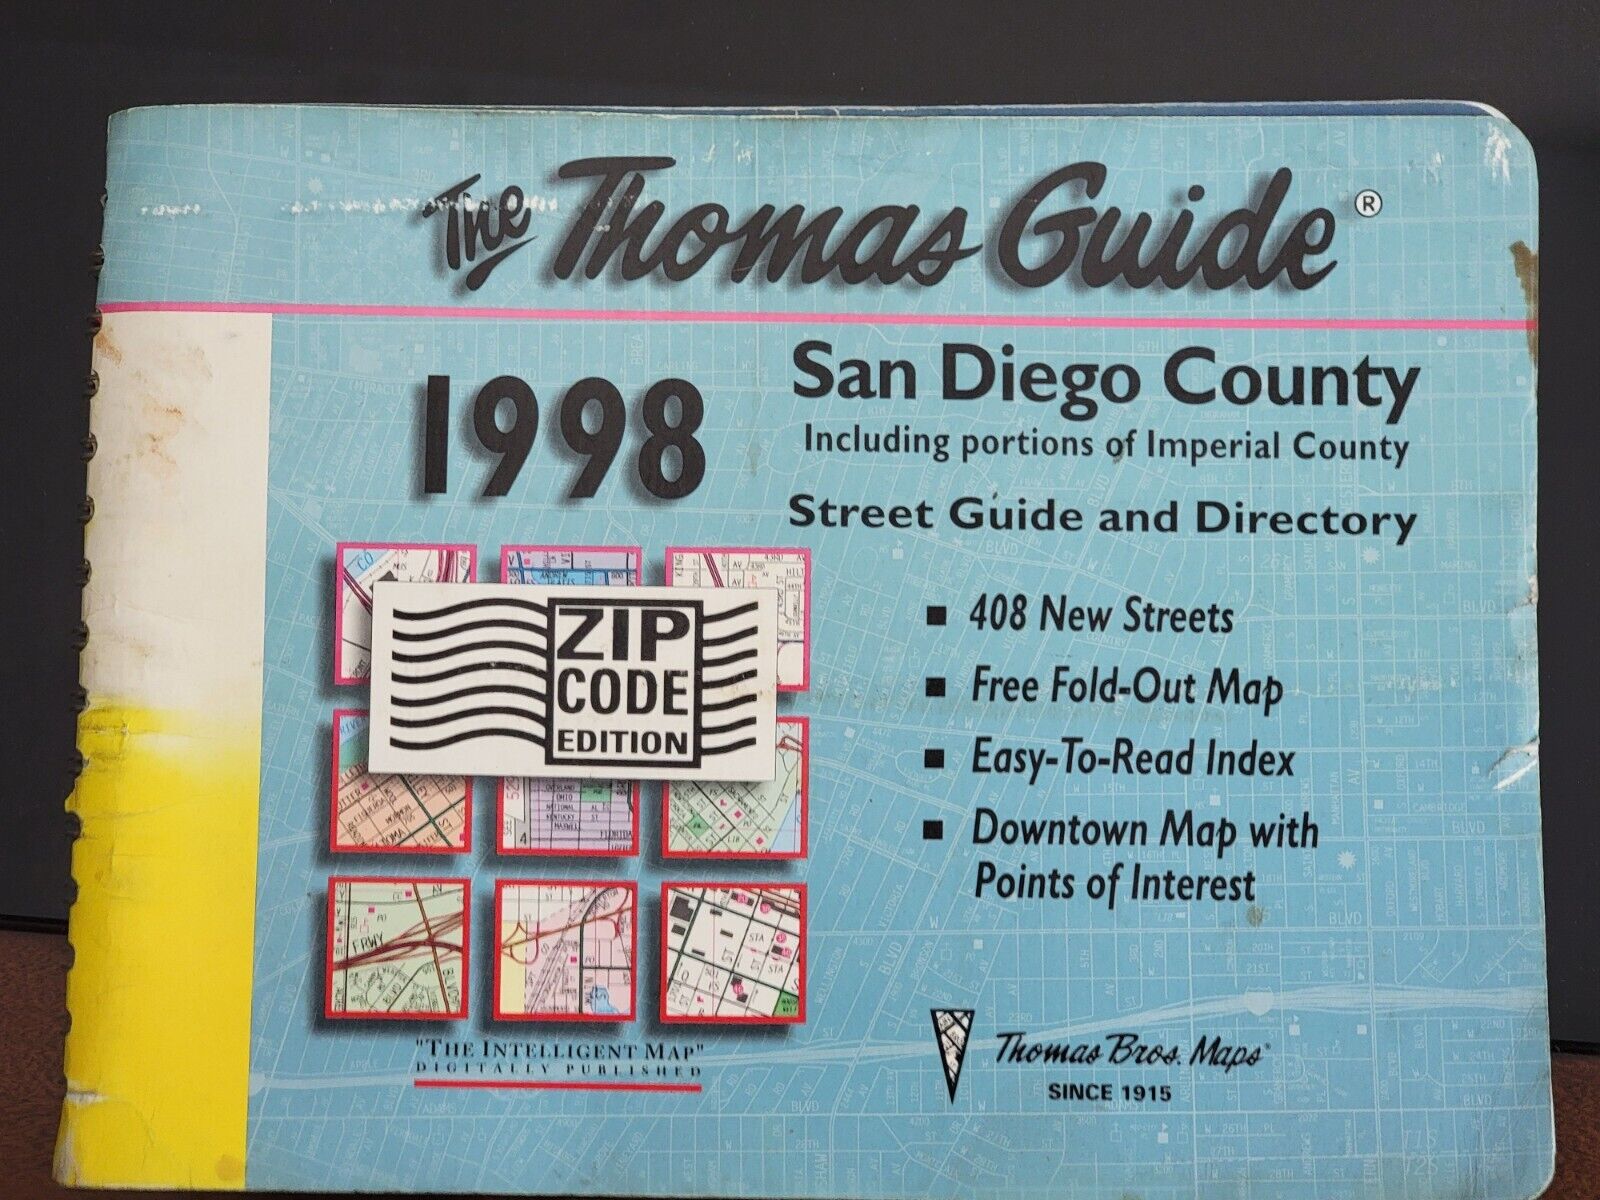 1998 San Diego County Thomas Guide